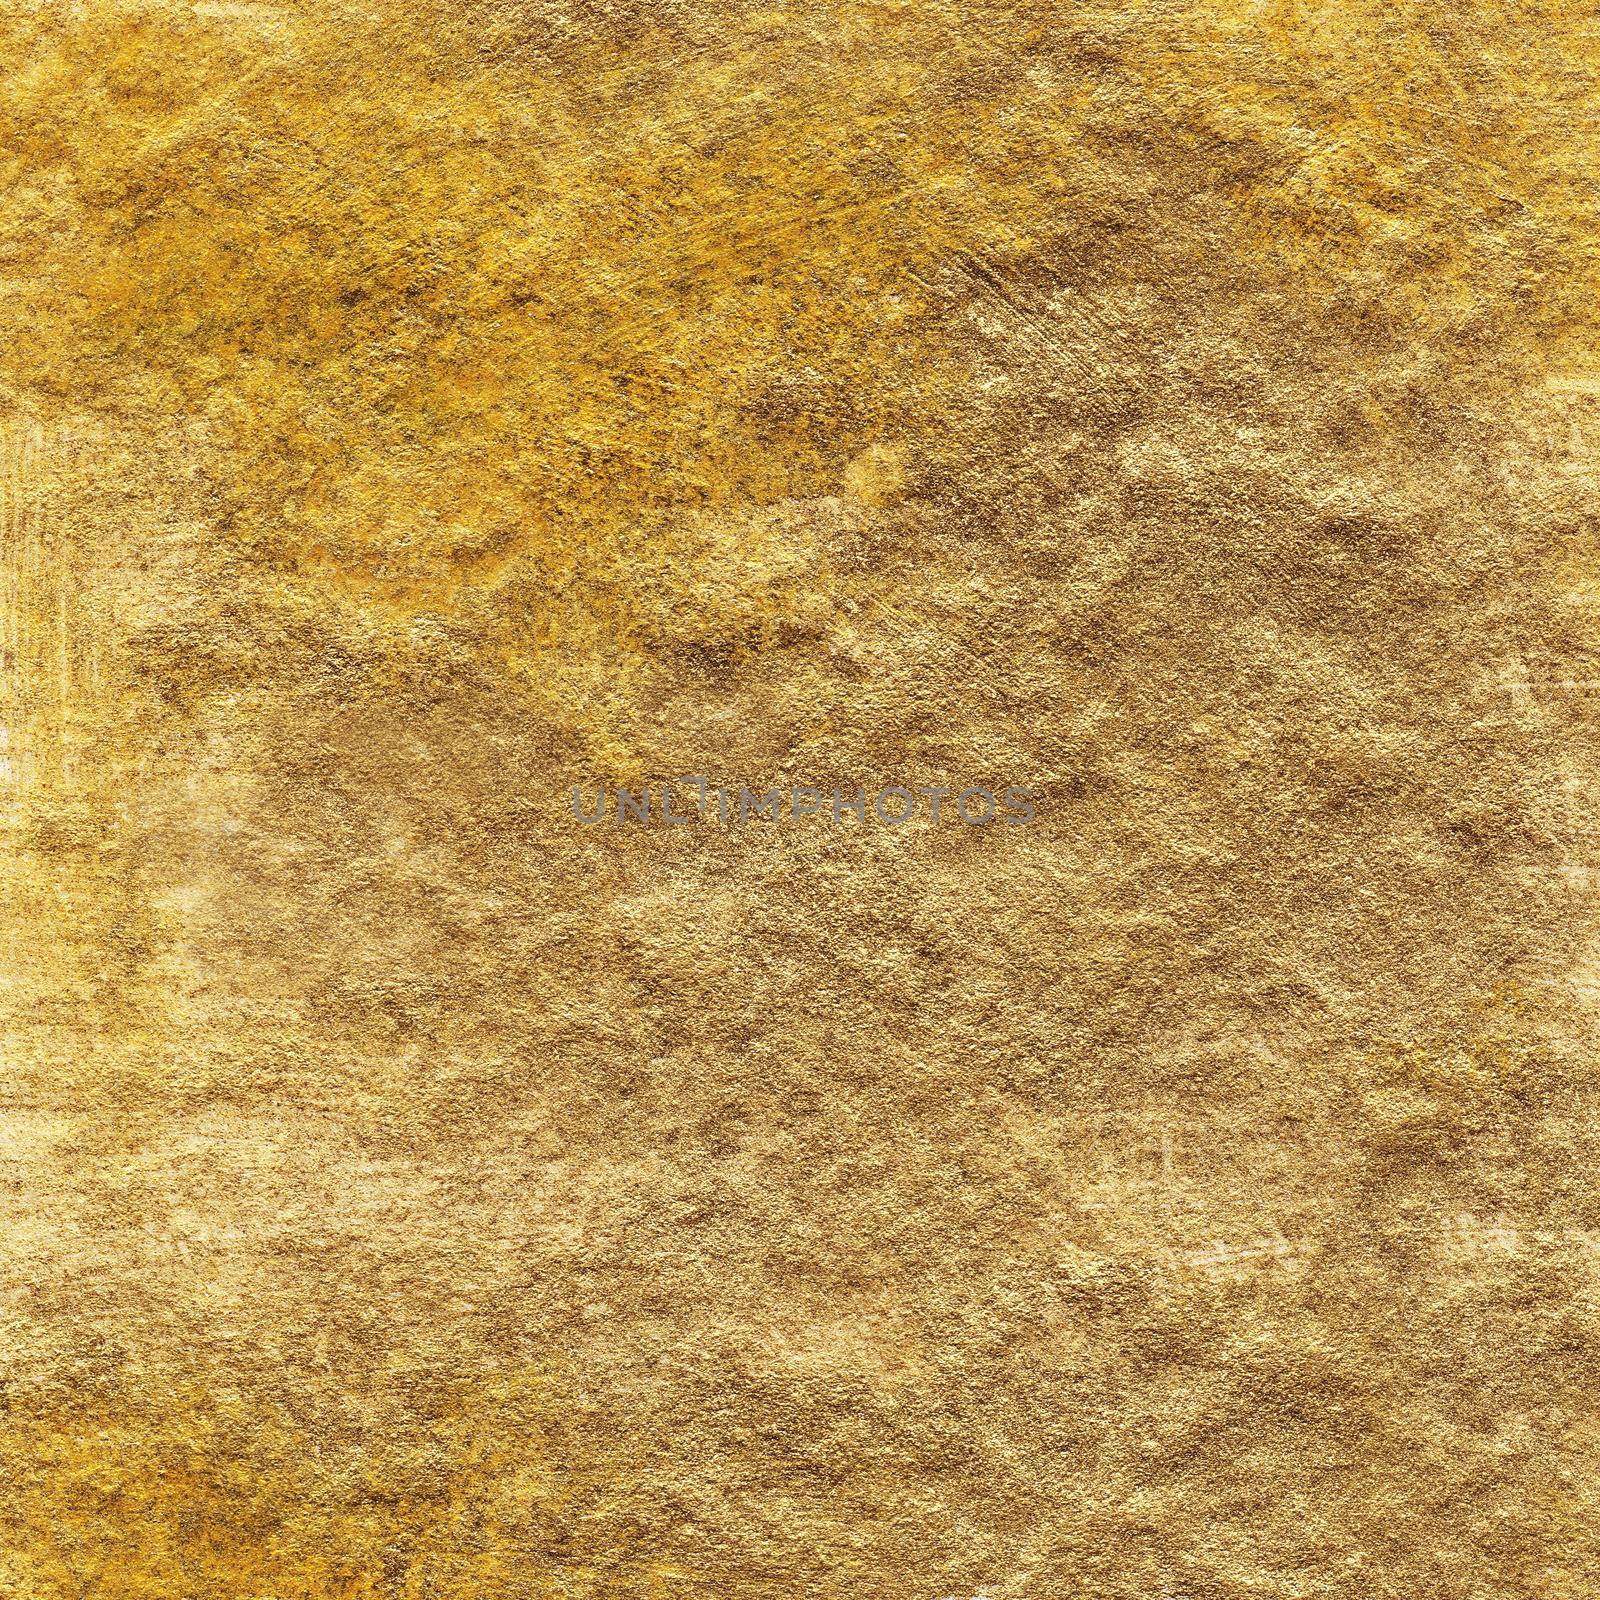 Sparkling Gold Glitter Background for Celebration Design by kisika